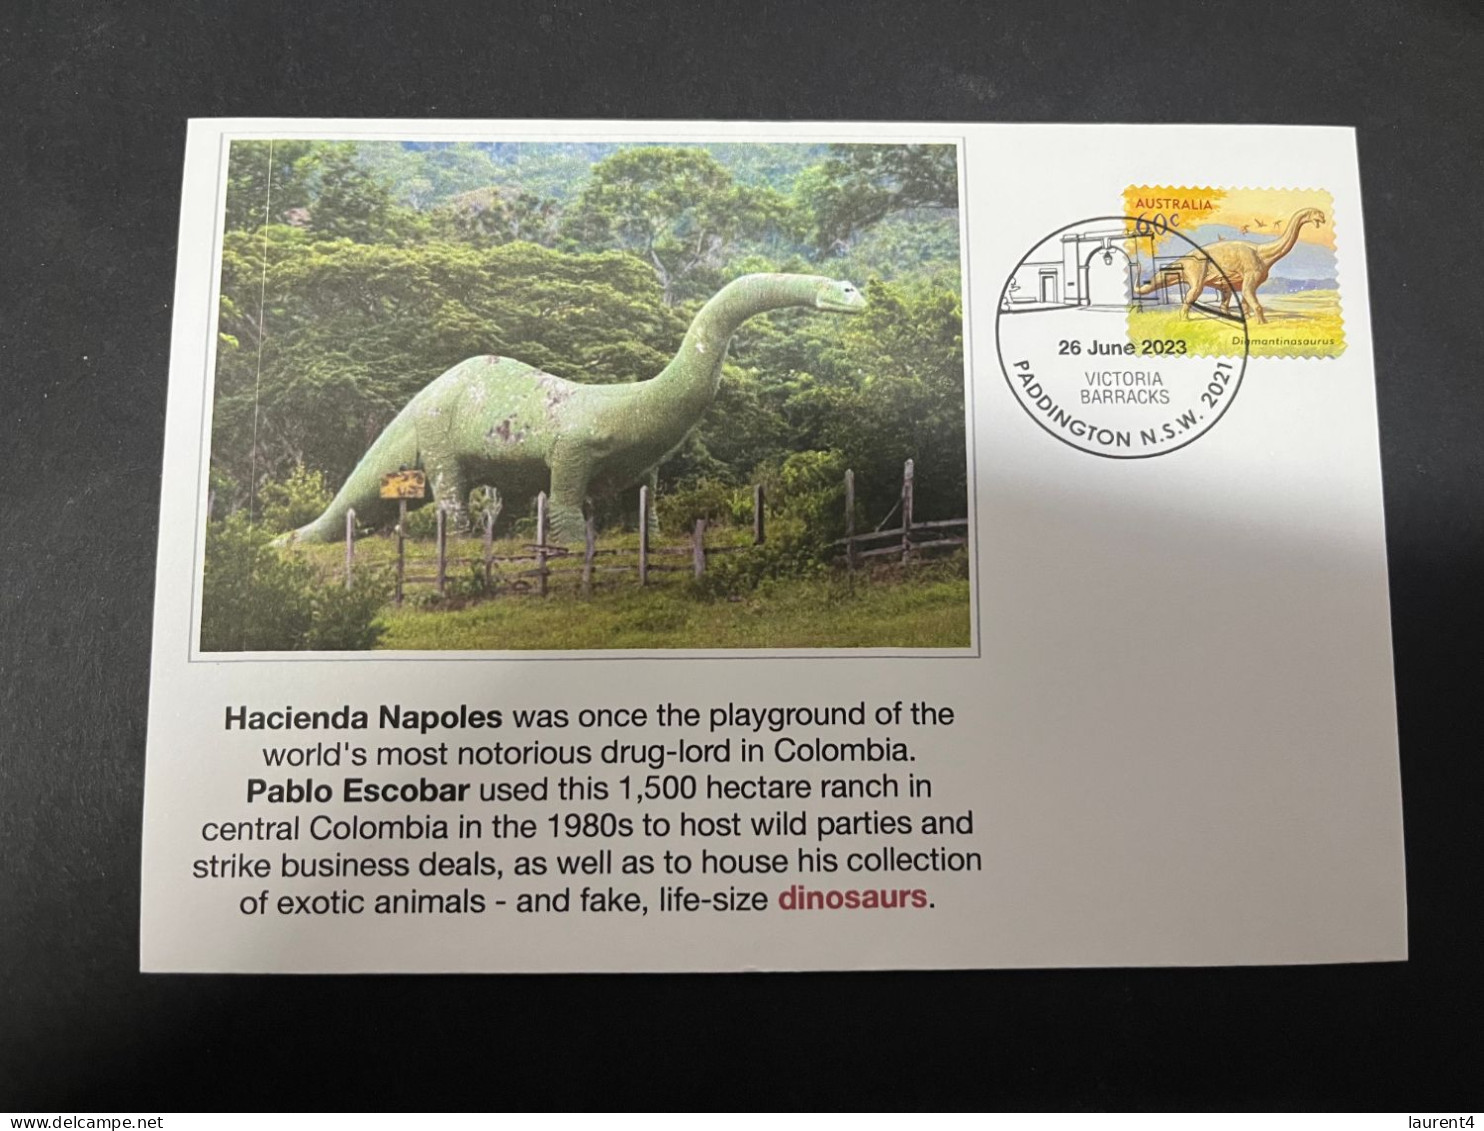 17-5-2024 (5 Z 23)  Dinoaur Stamp - Hacienda Napoles (Pablo Escobar Drug Lord Residence In Colombia) - Prehistorics